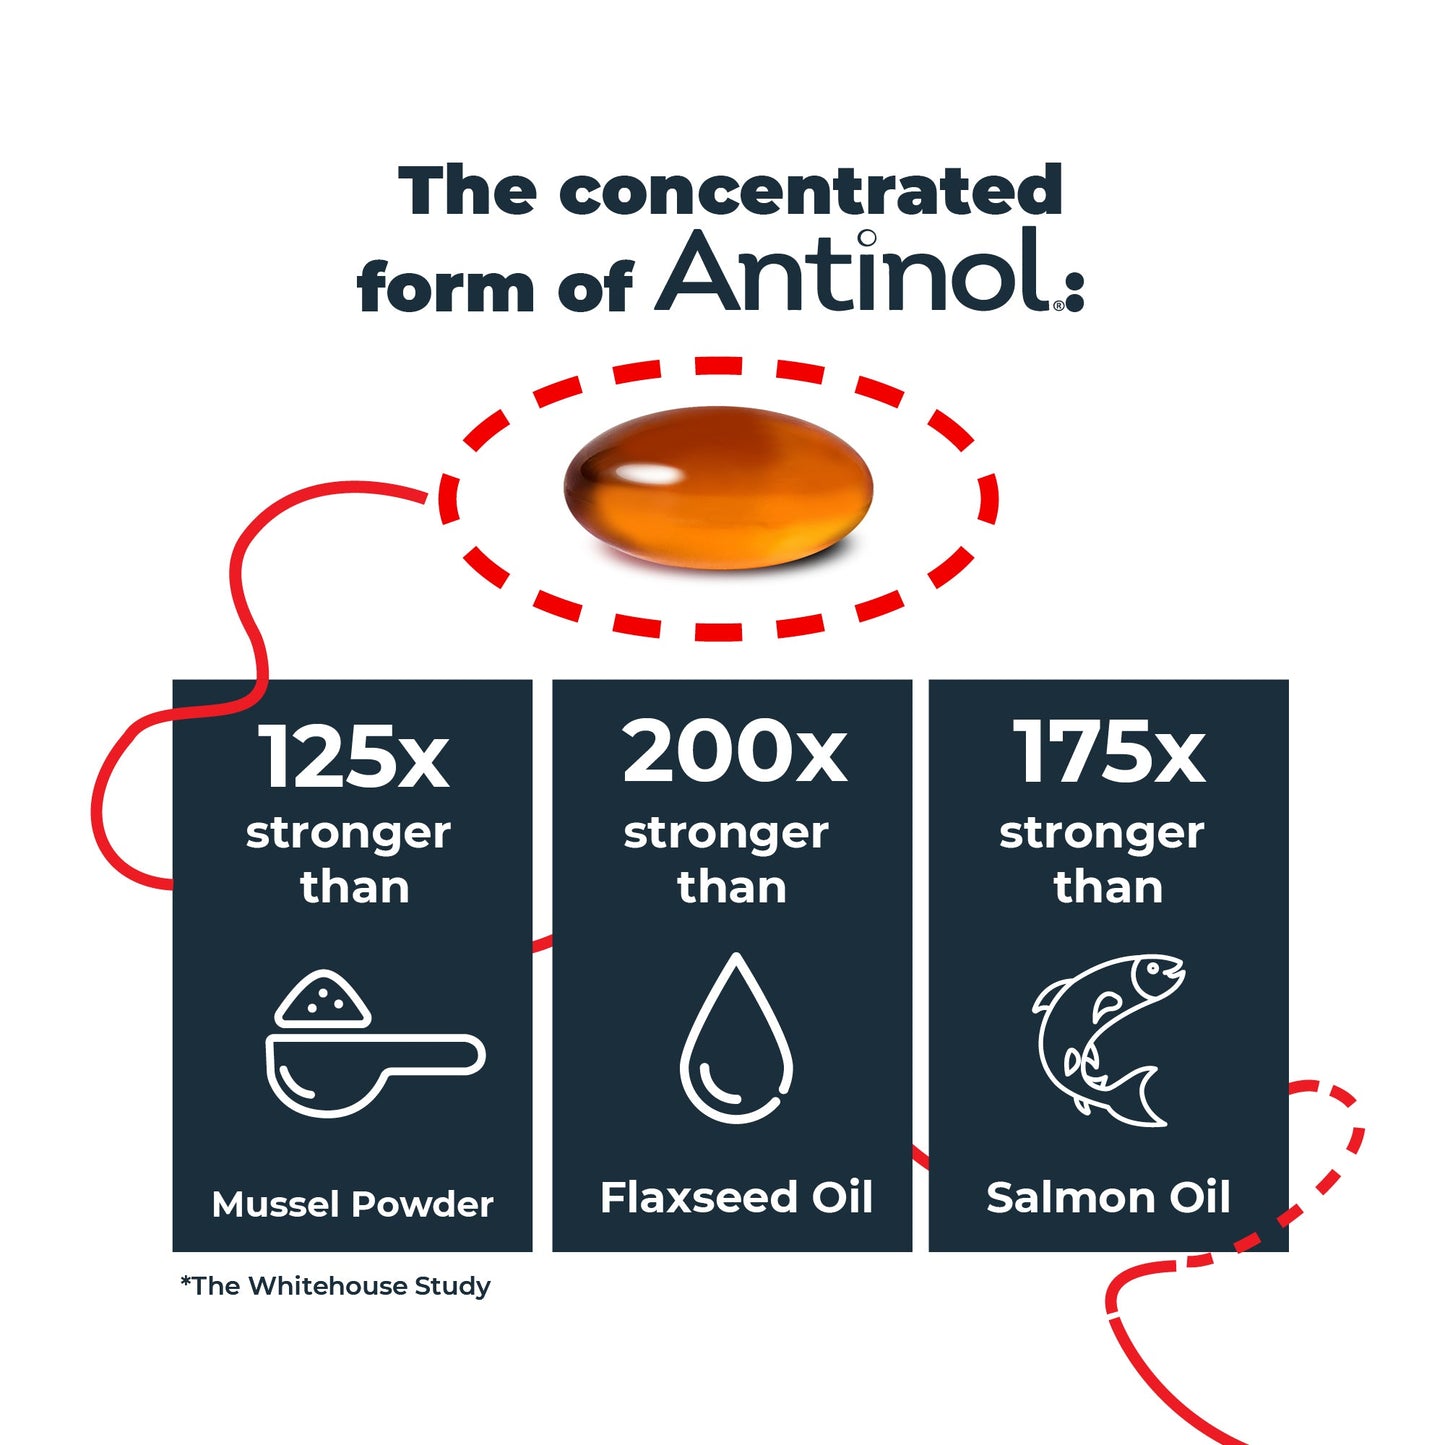 Antinol 60-day Starter Pack – Cat